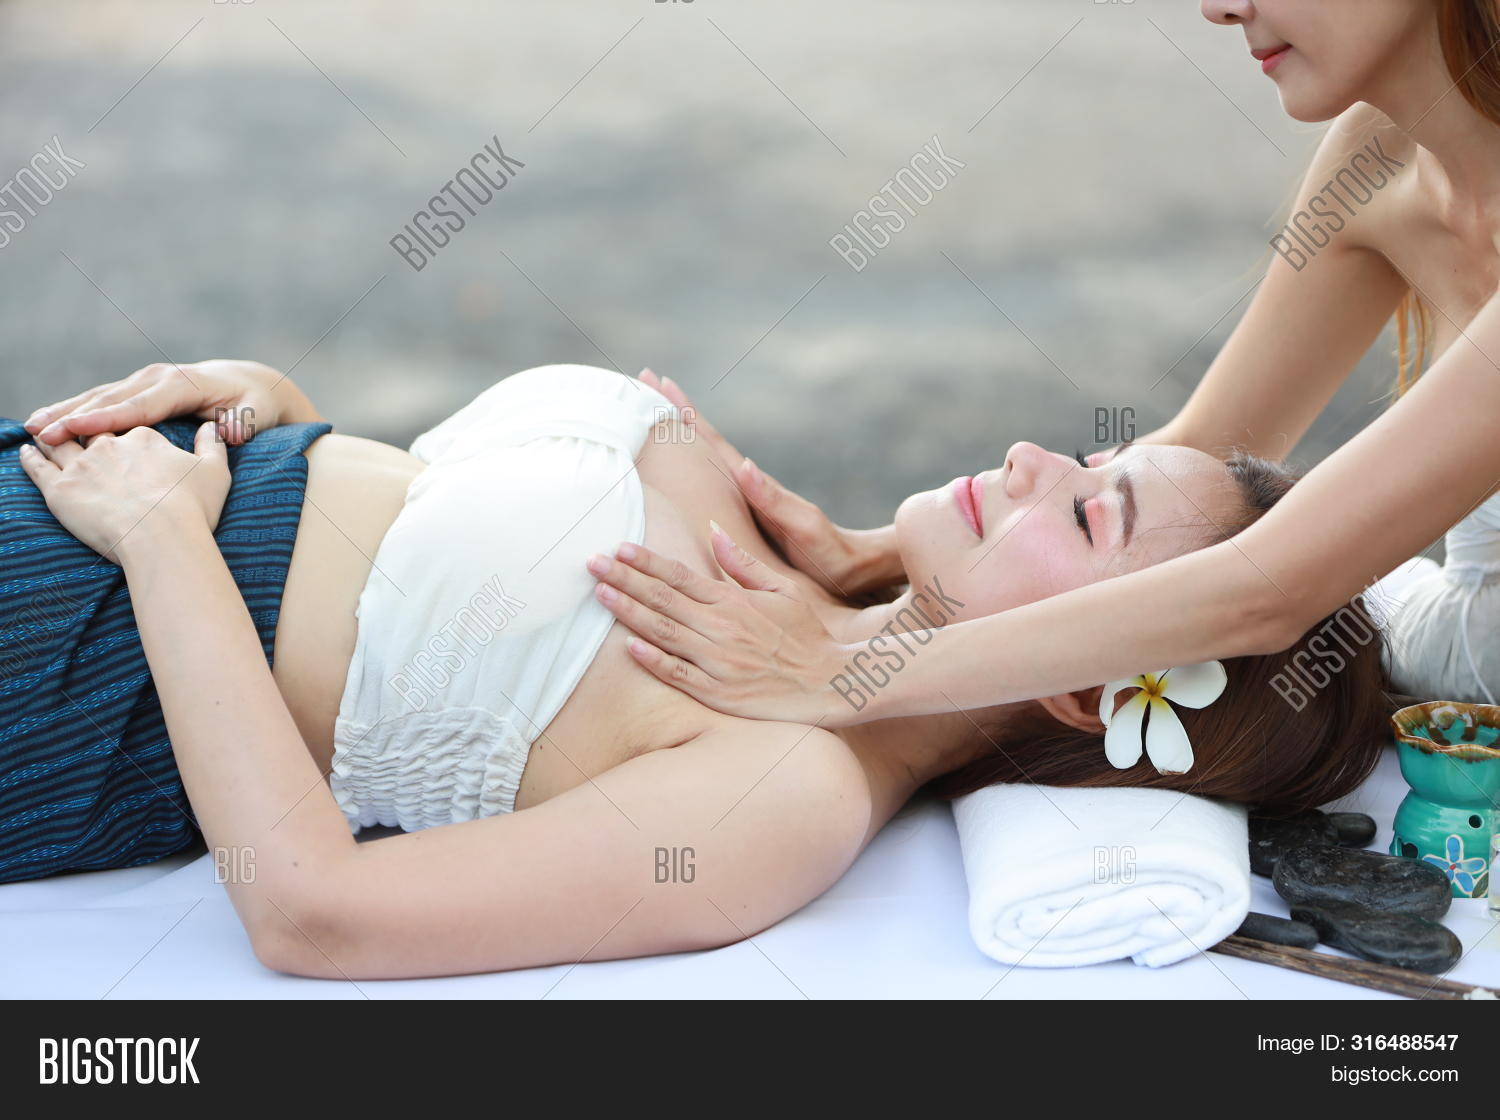 dasha rodionova share asian big boob massage photos